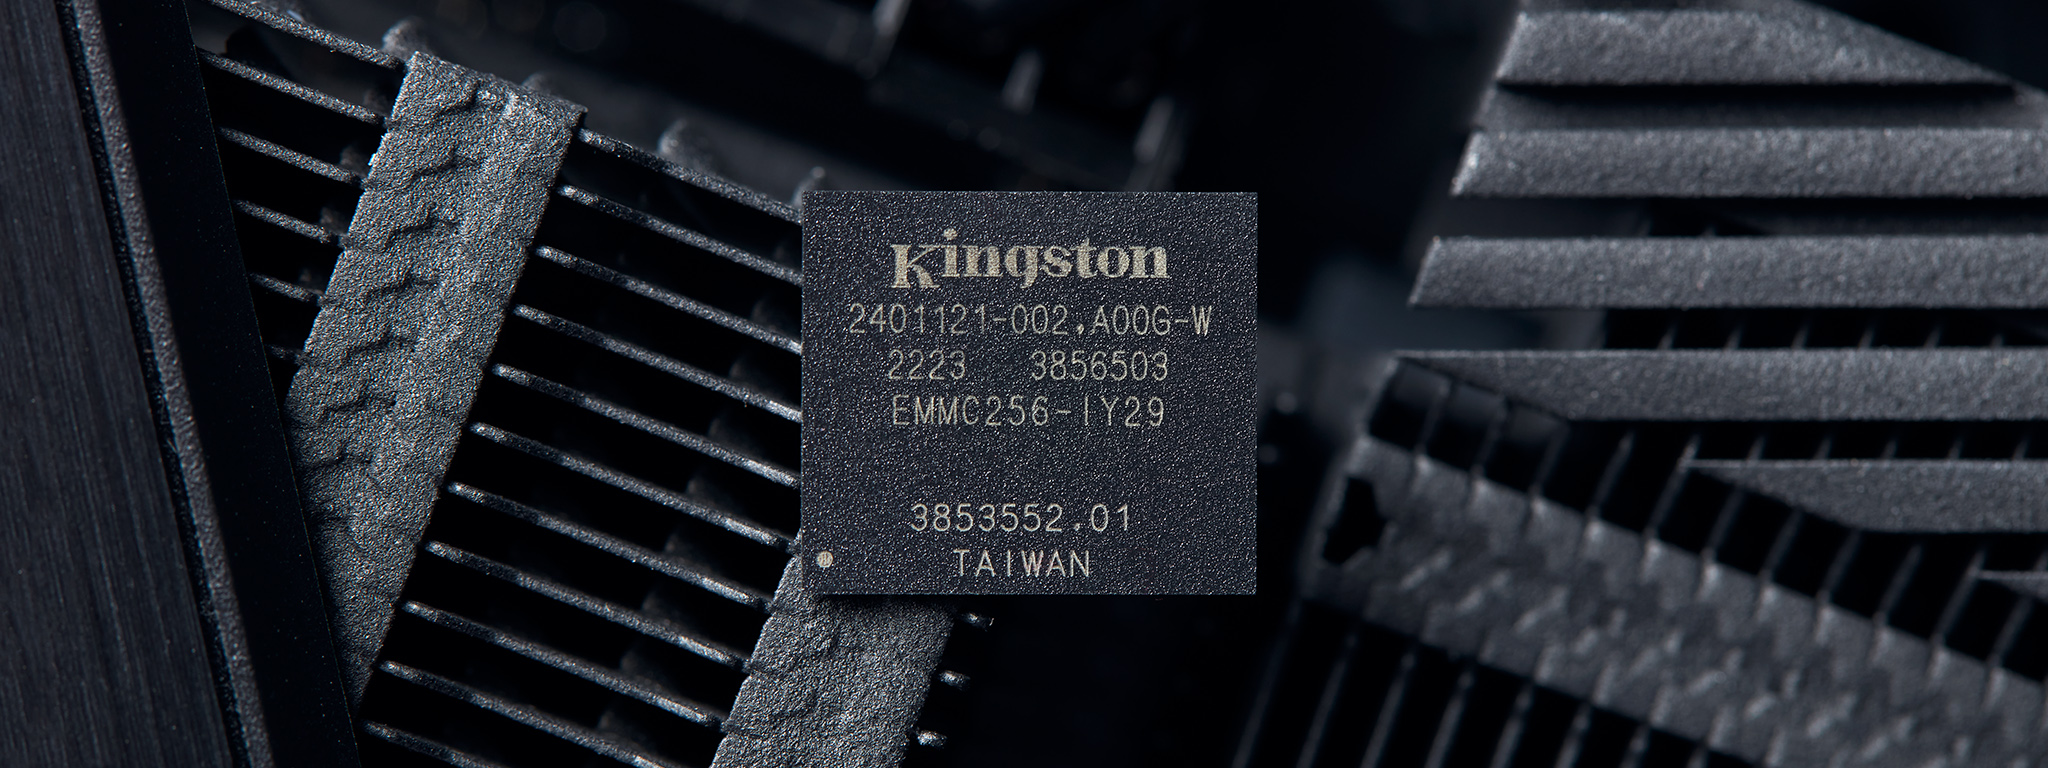 Kingston eMMC ด้านหน้าของเคสเครื่องสีดำ